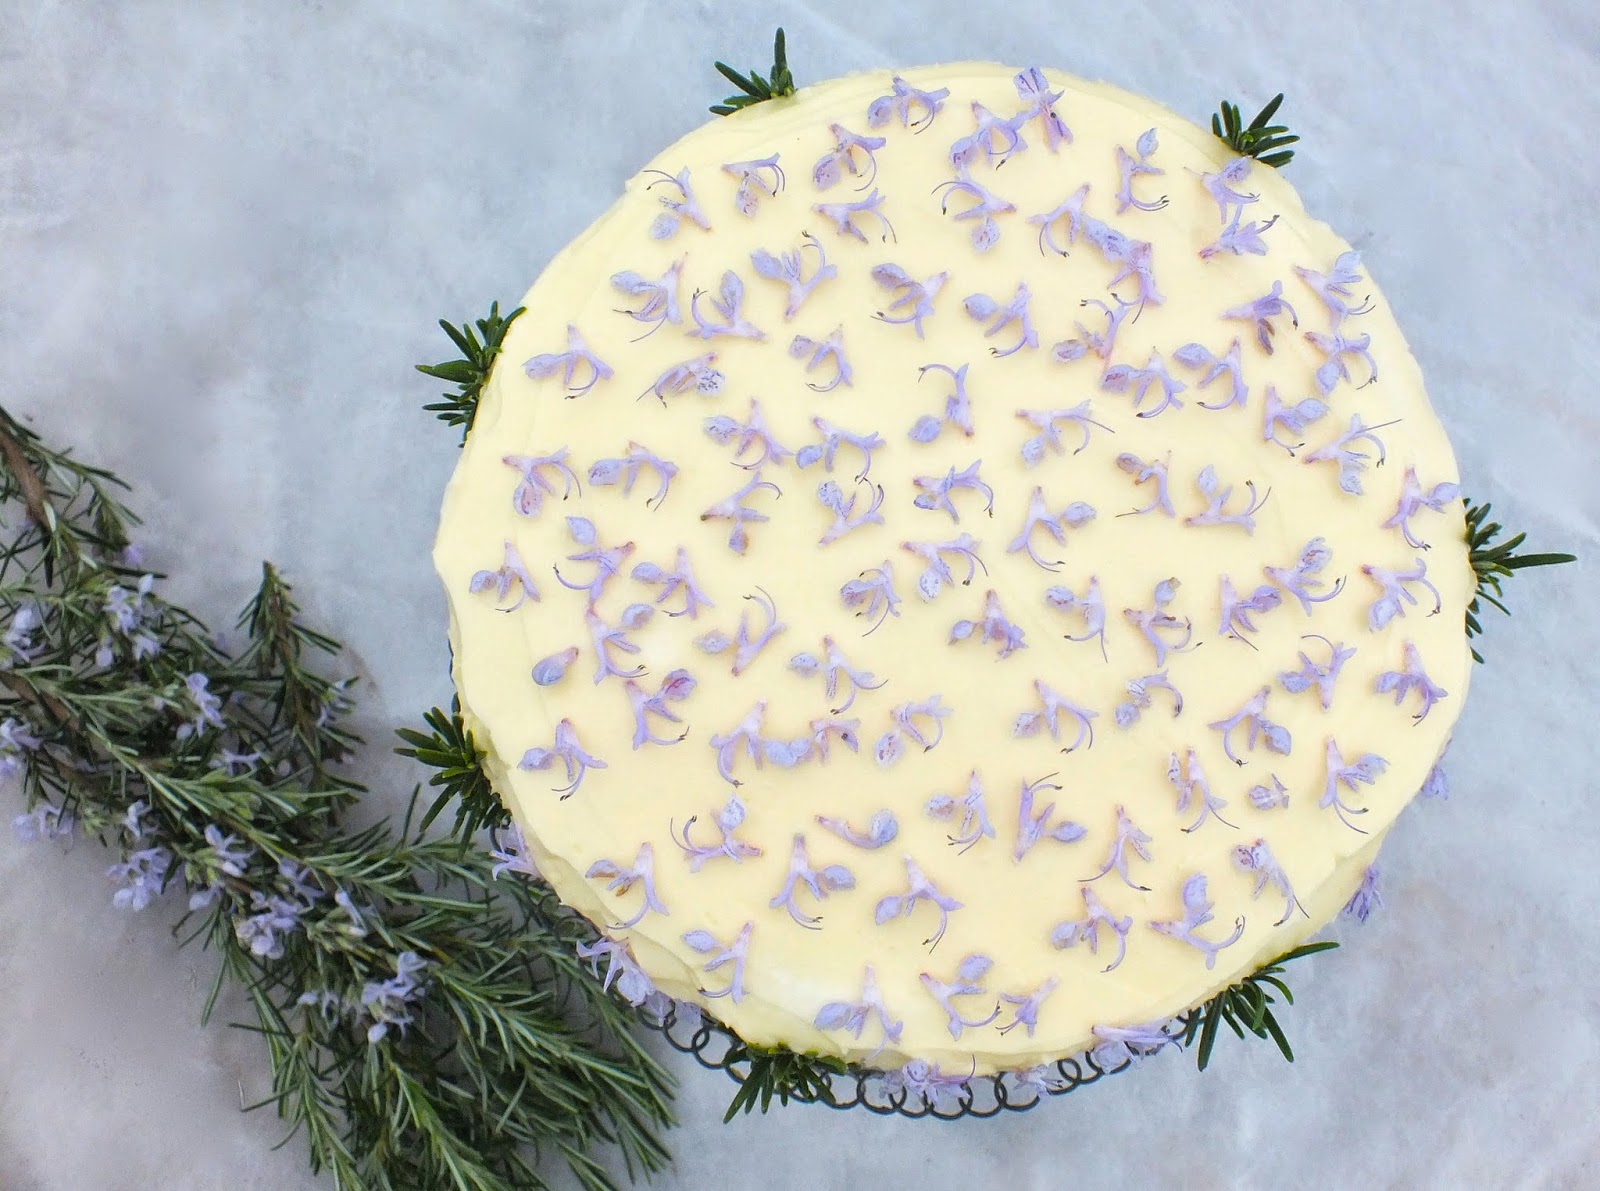 Edible flowers: Rosemary Cake